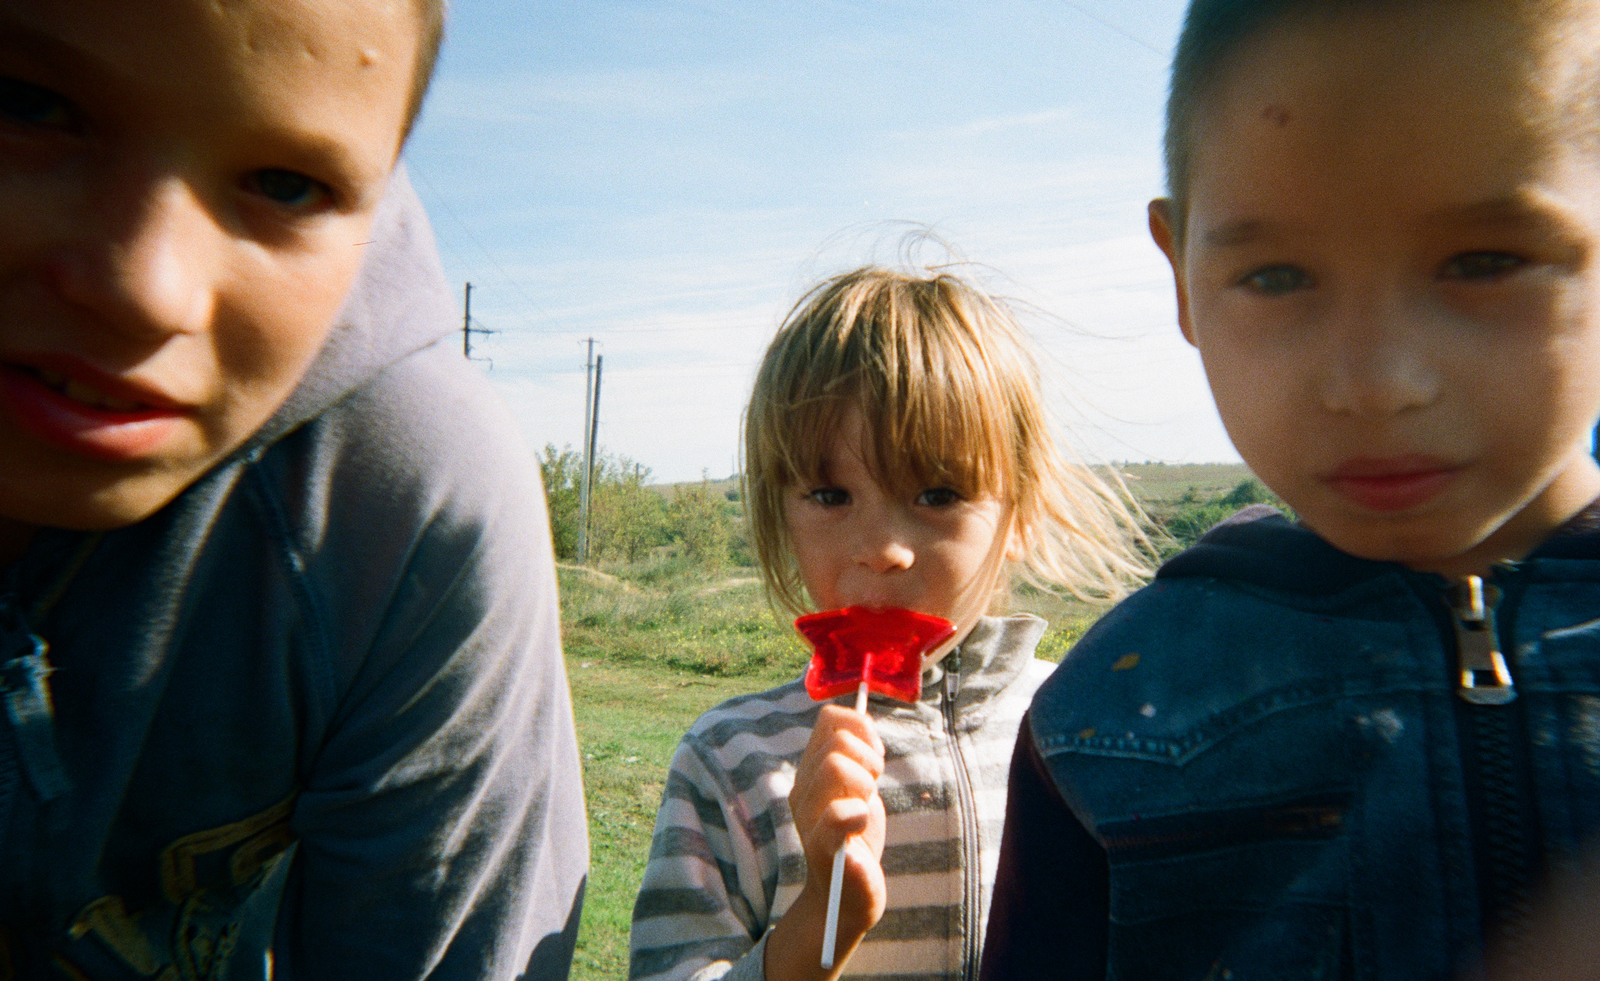 Three Ukrainian children, one eating lolly